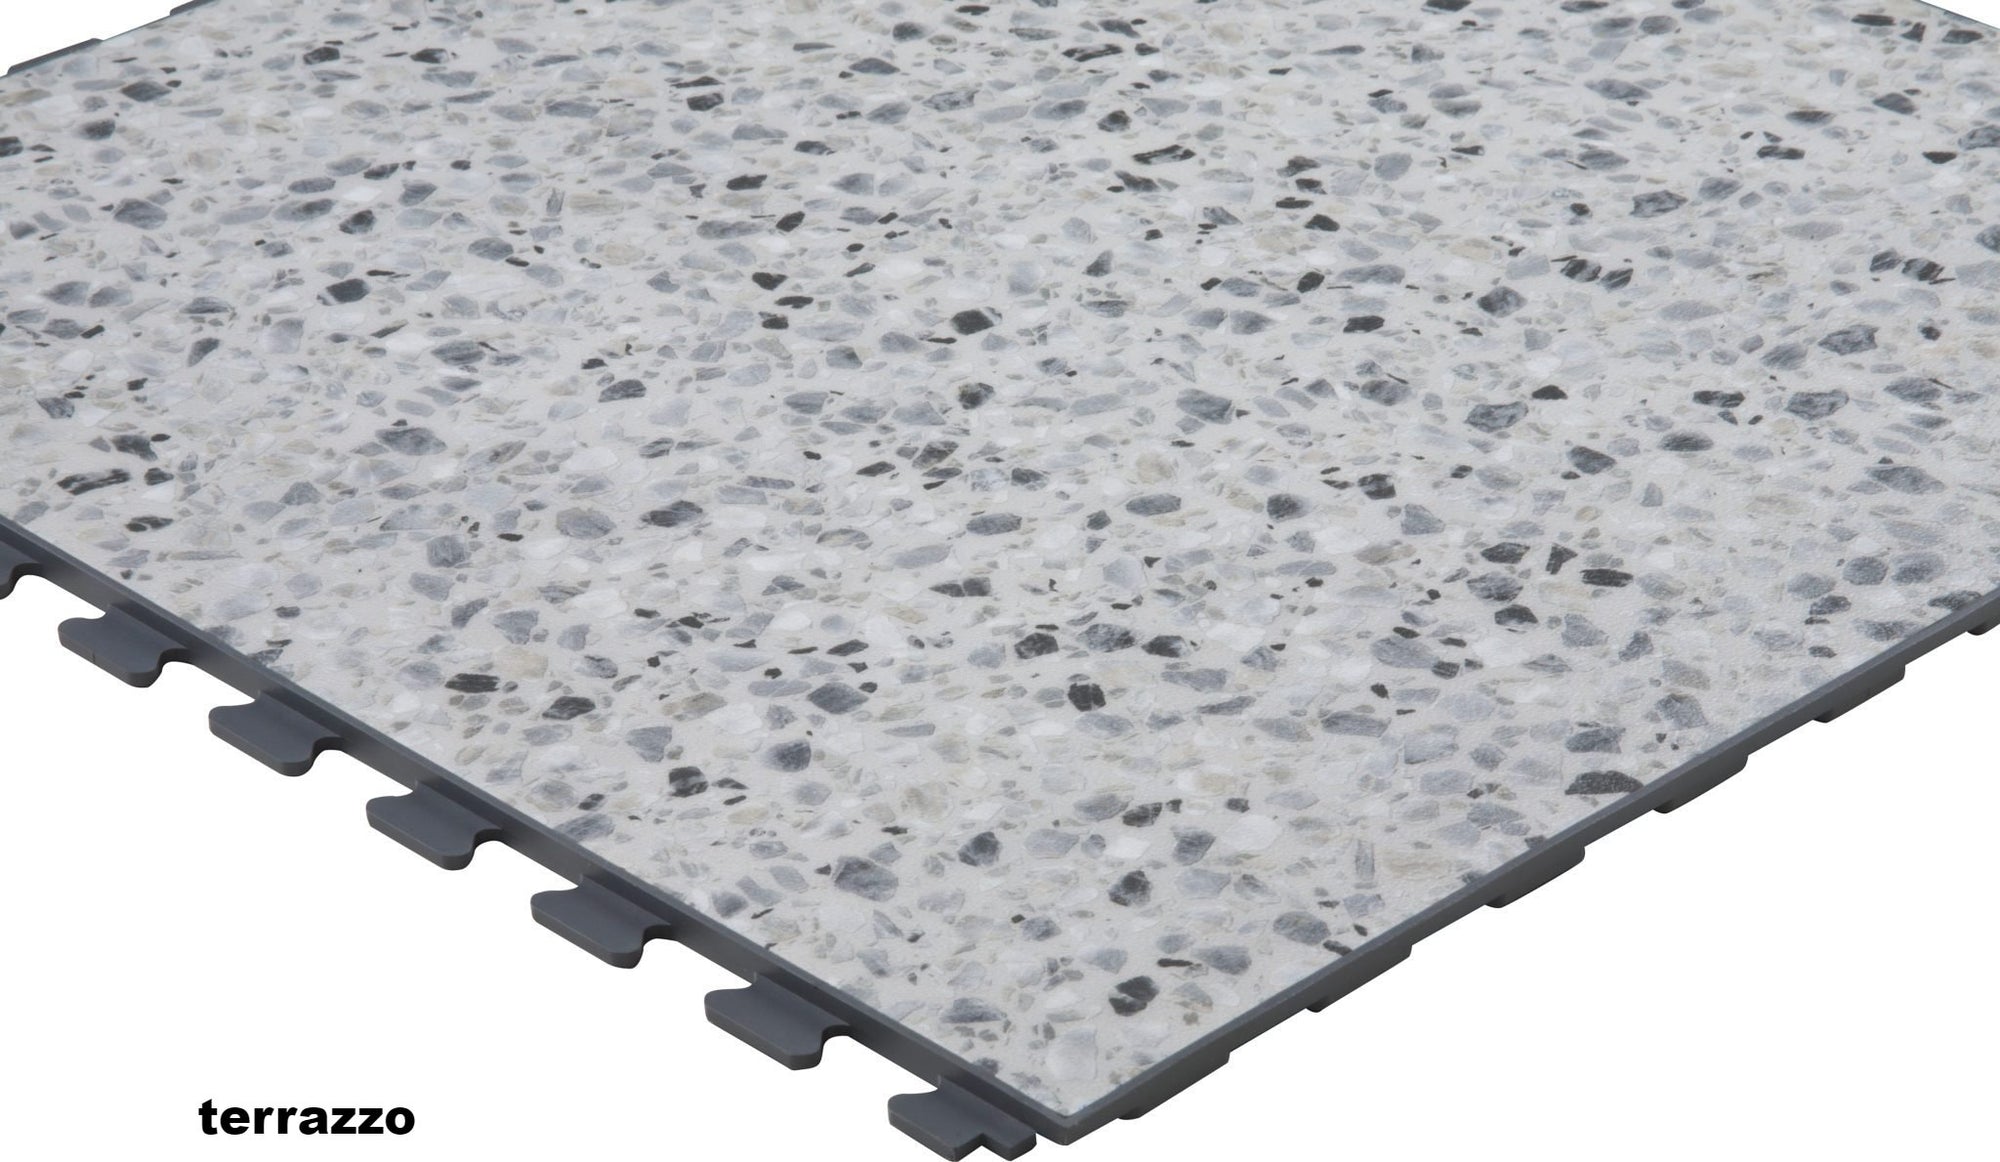 Supra Design Series Tiles - FITFLOORS...Rubber Floors & more 